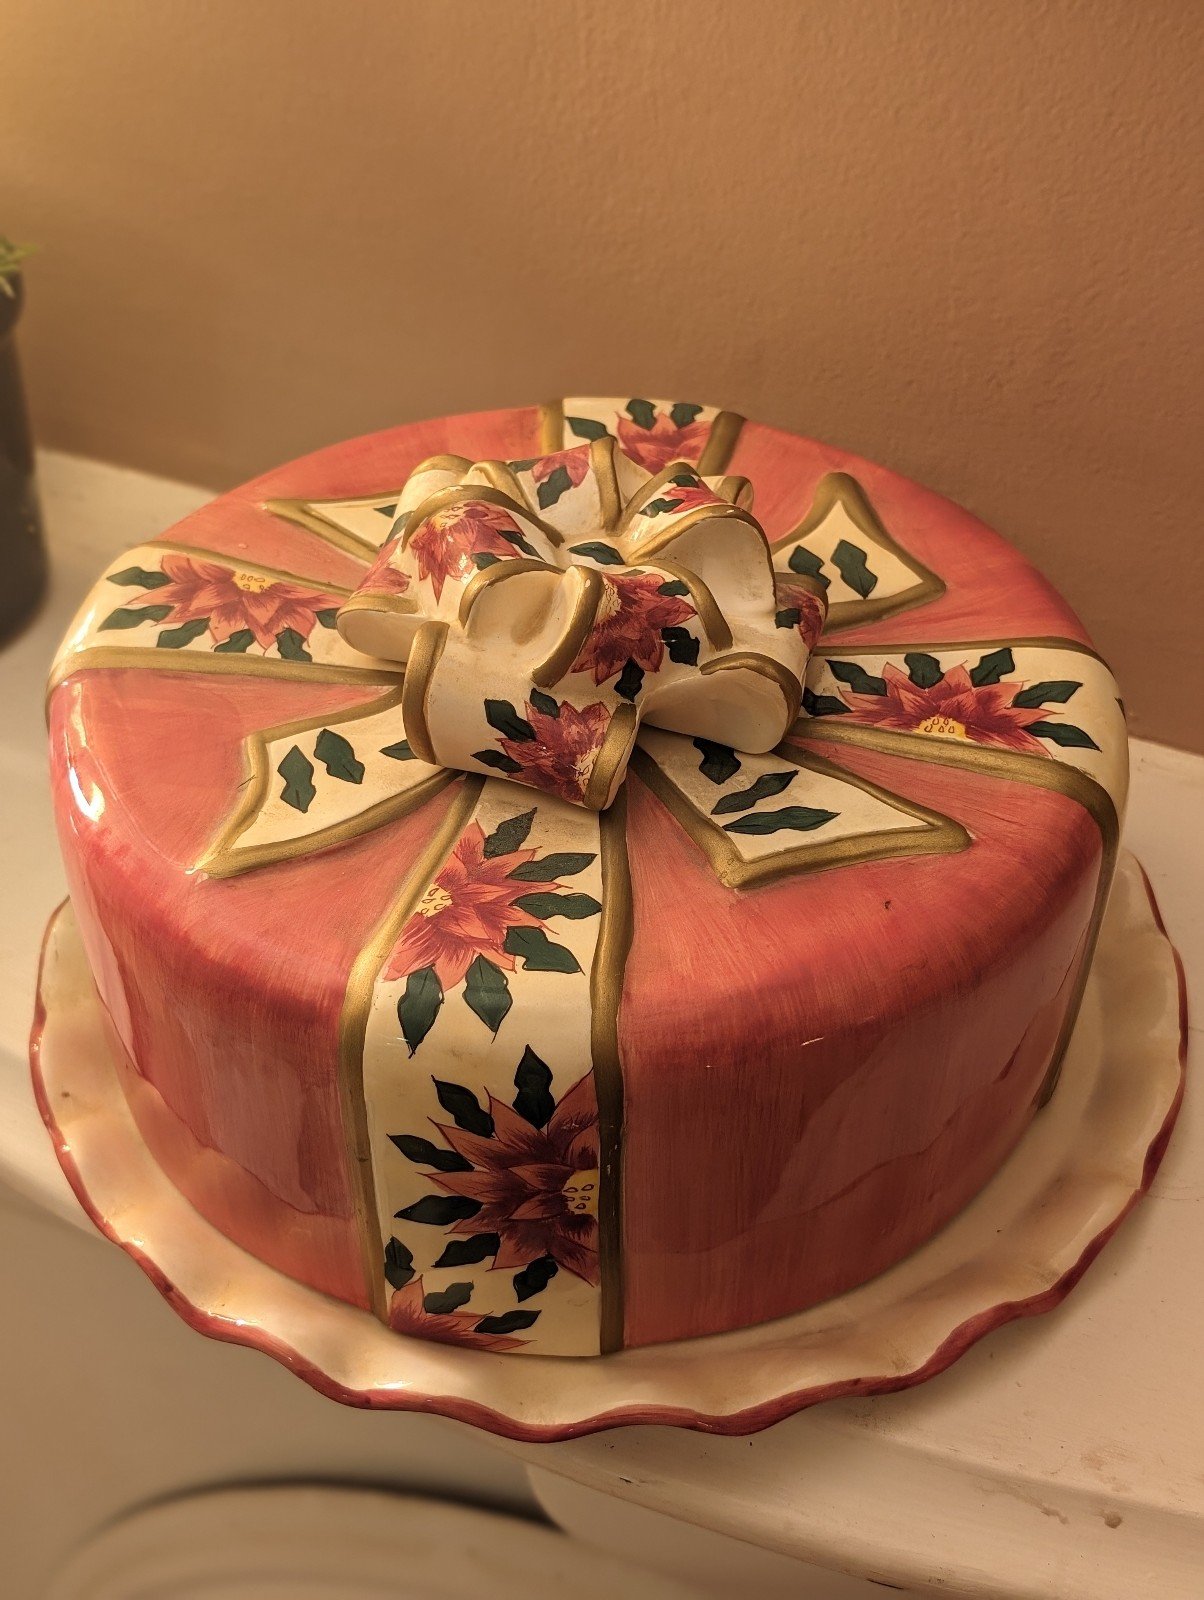 Vintage World Bazaar Inc Covered Cake Plate Christmas Gift Design Poinsettia ag6SDNod4